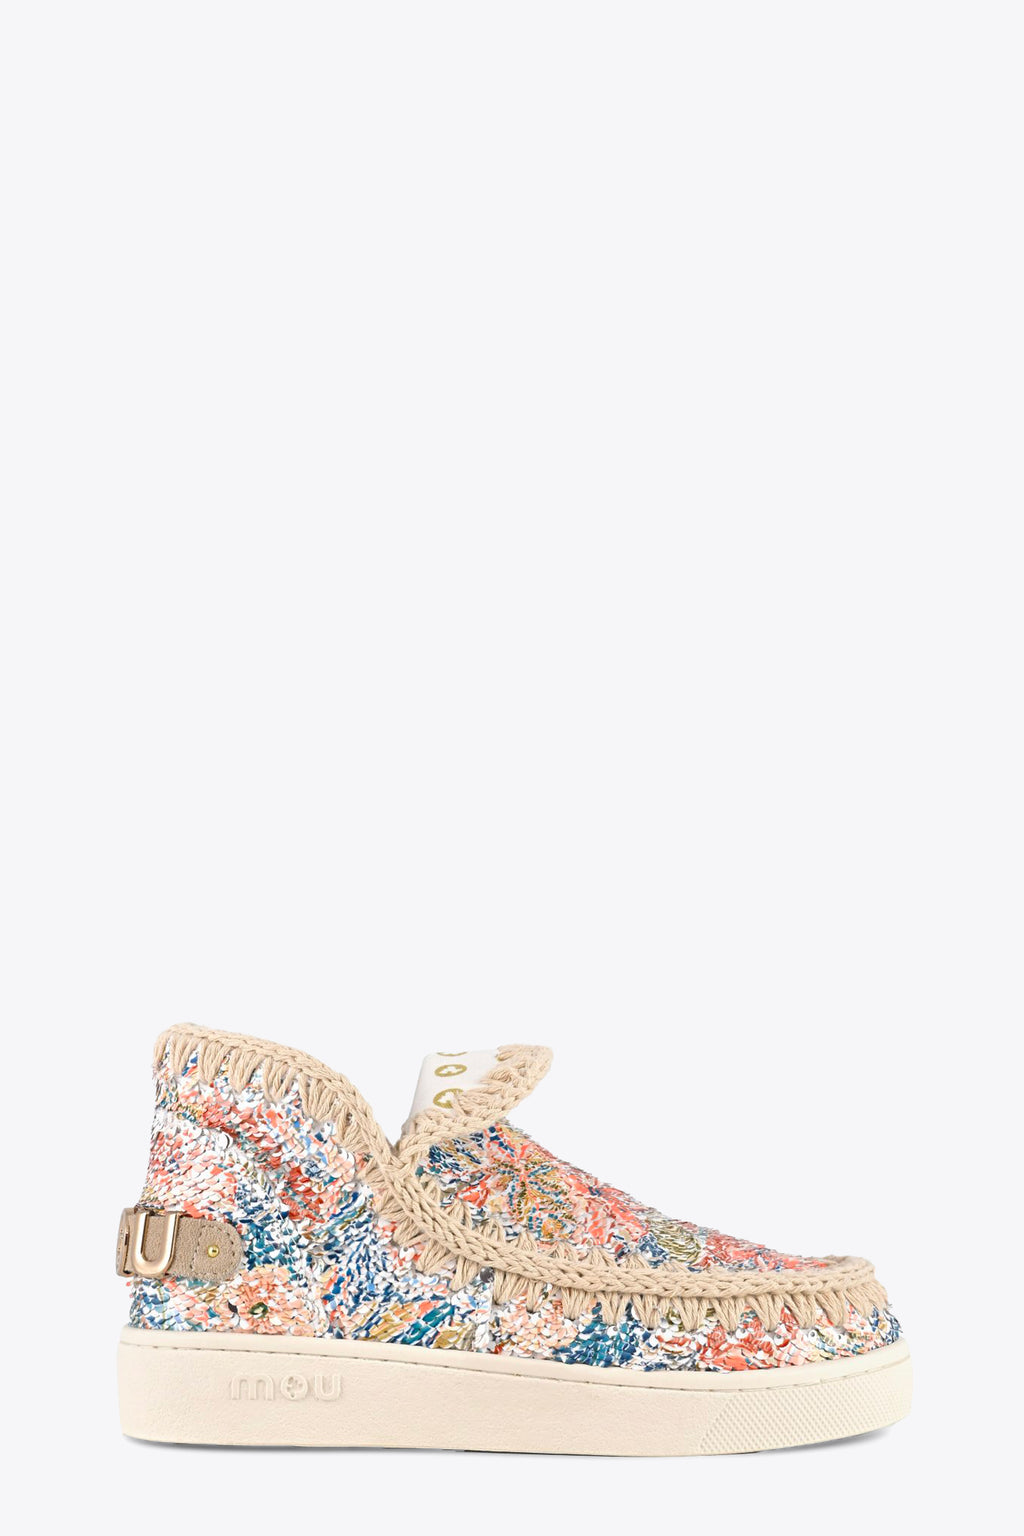 alt-image__Sneaker-slip-on-in-paillettes-multicolor---Summer-eskimo-sneaker-printed-sequins